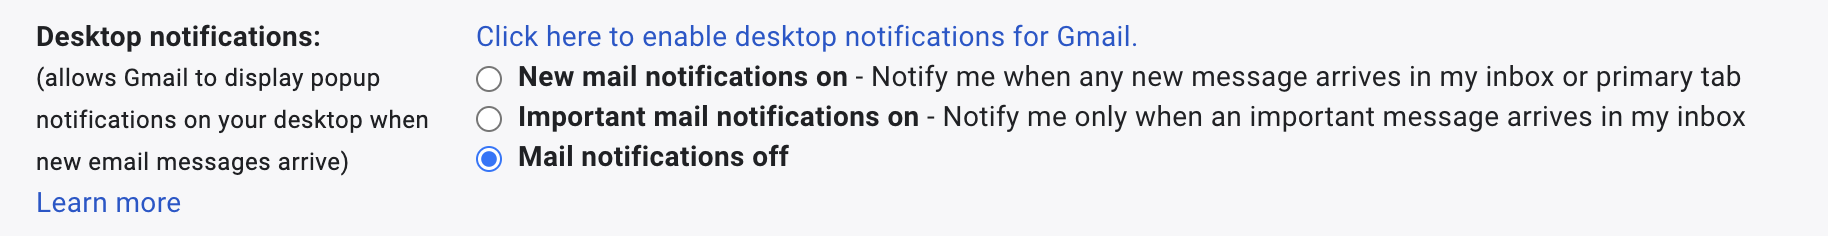 Gmail desktop notifications